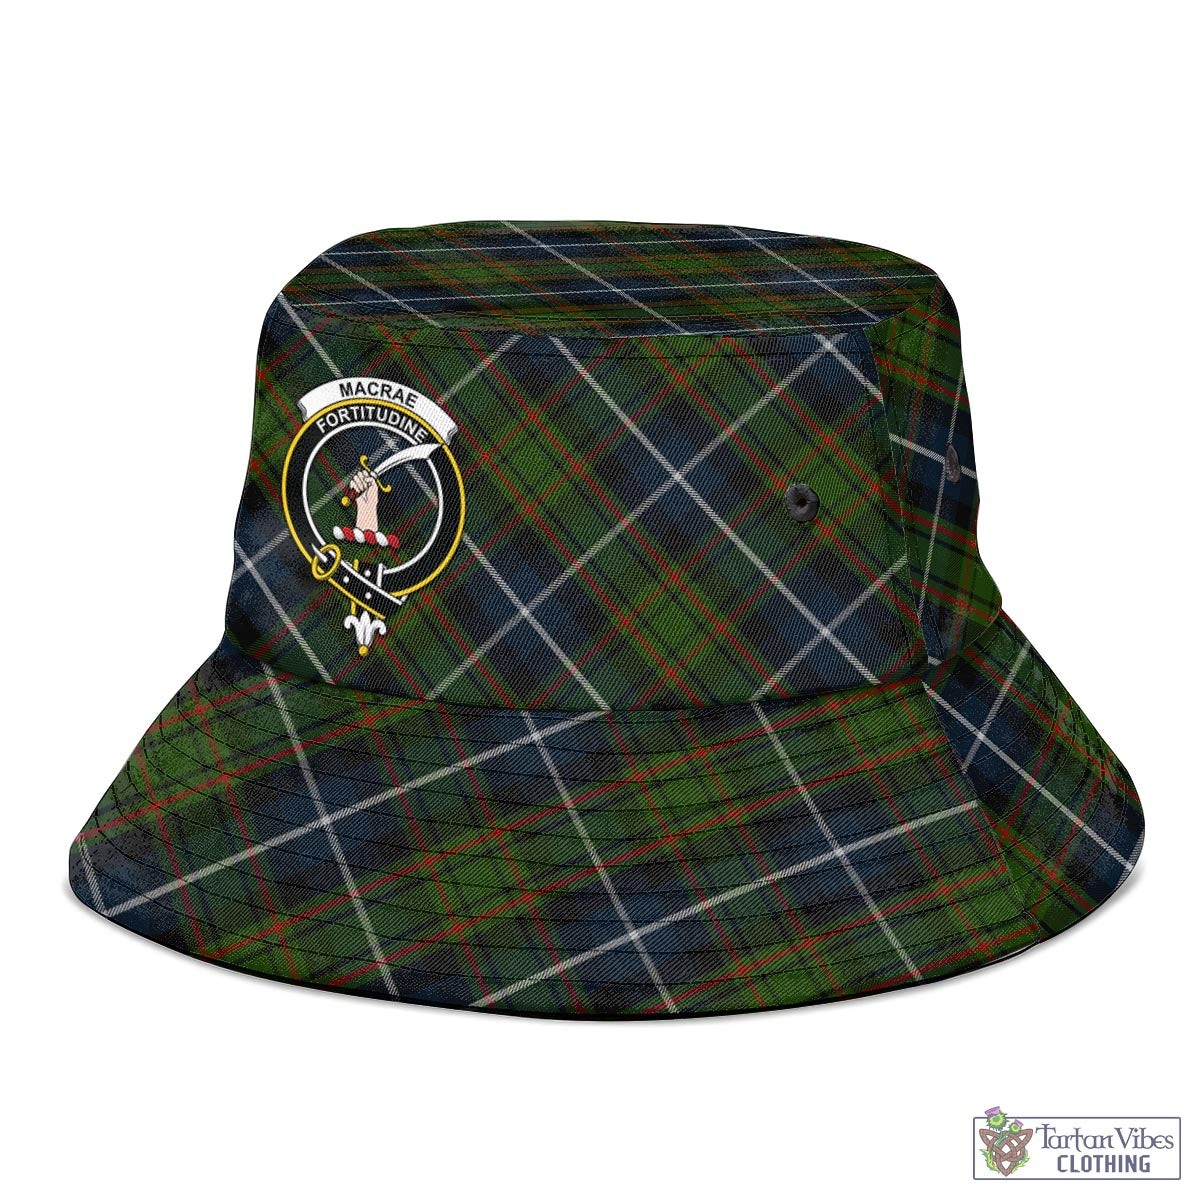 Tartan Vibes Clothing MacRae Hunting Tartan Bucket Hat with Family Crest